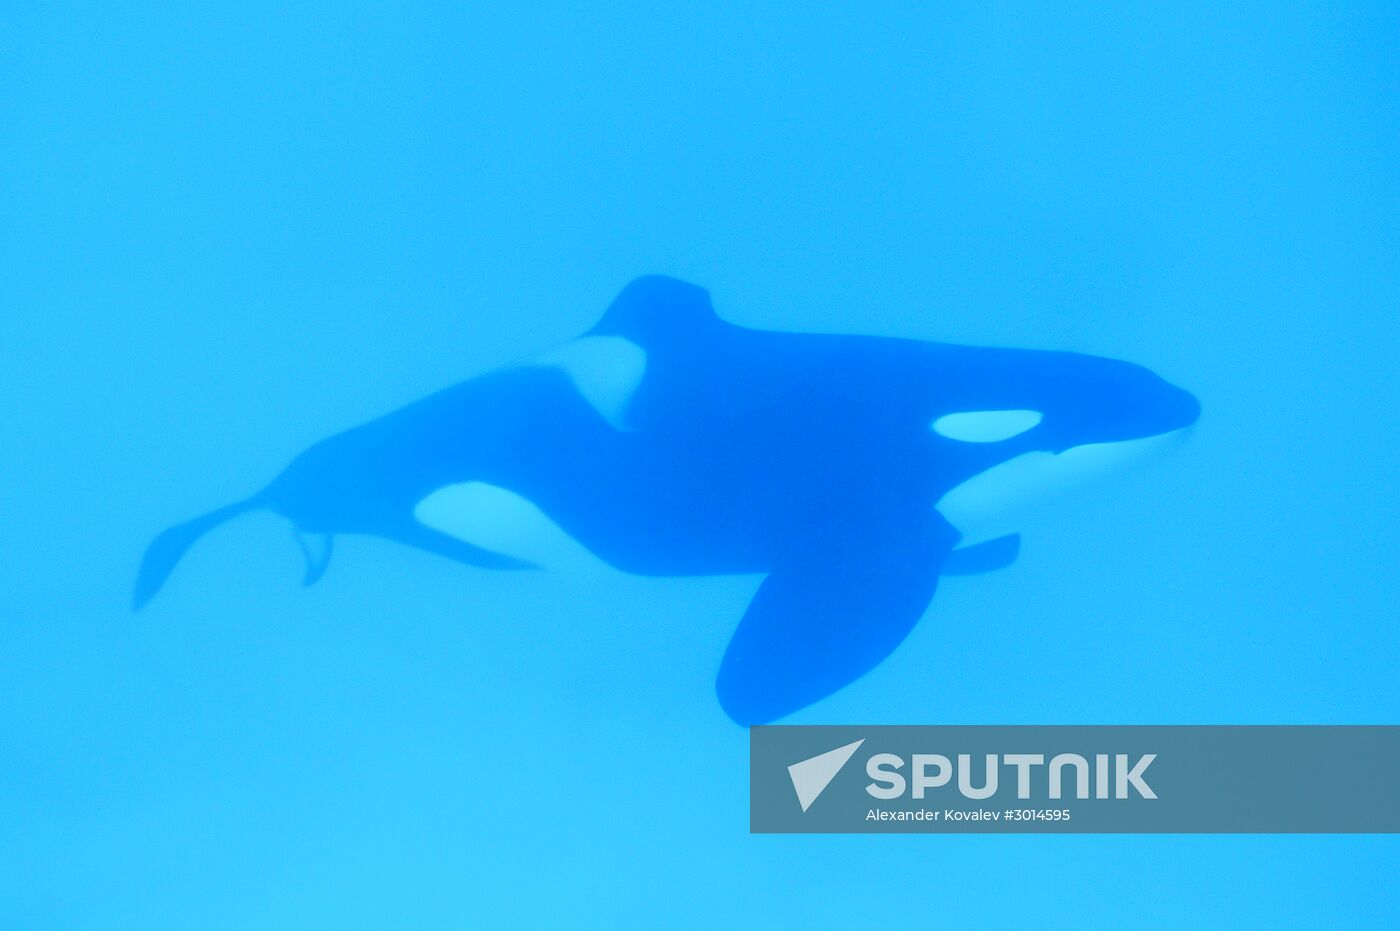 An orca/killer whale show in Tenerife island, Spain